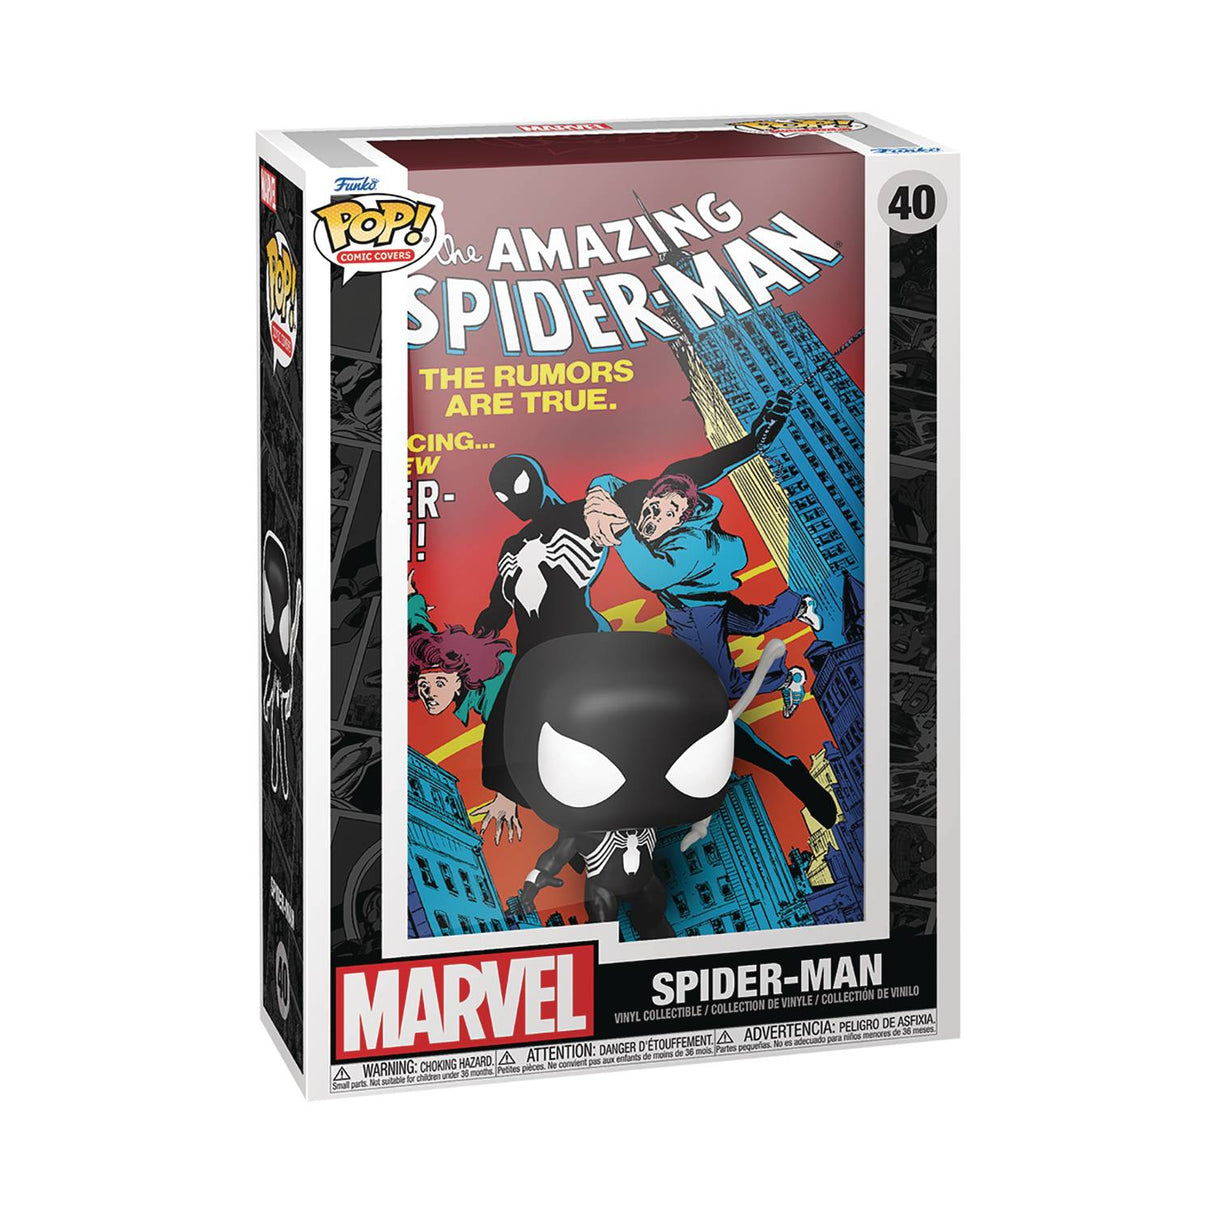 Marvel Amazing Spiderman #252 Funko Comic Cover Pop! Vinyl Figure